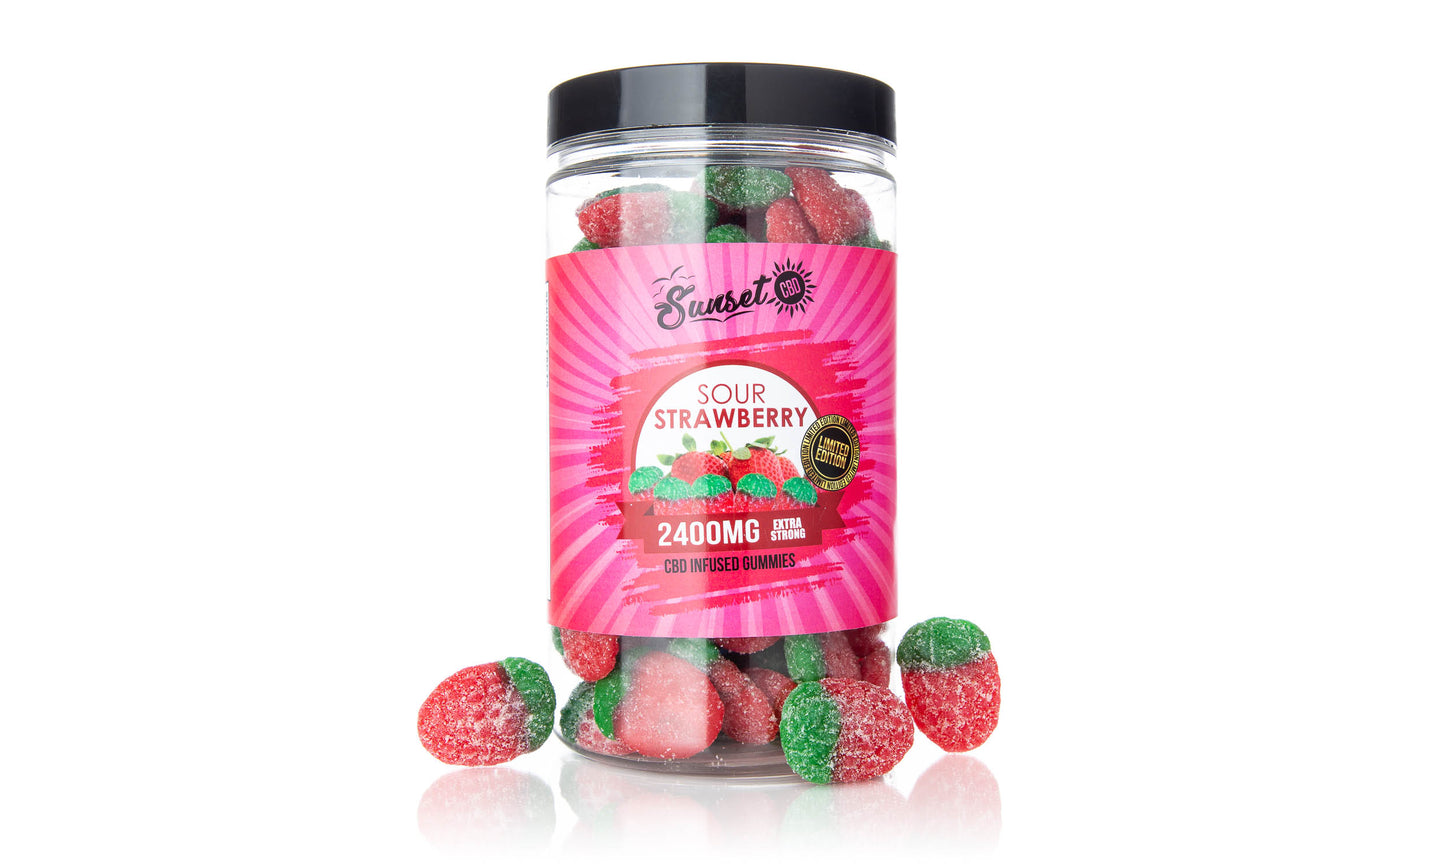 Sunset CBD Infused Sour Strawberry Gummies